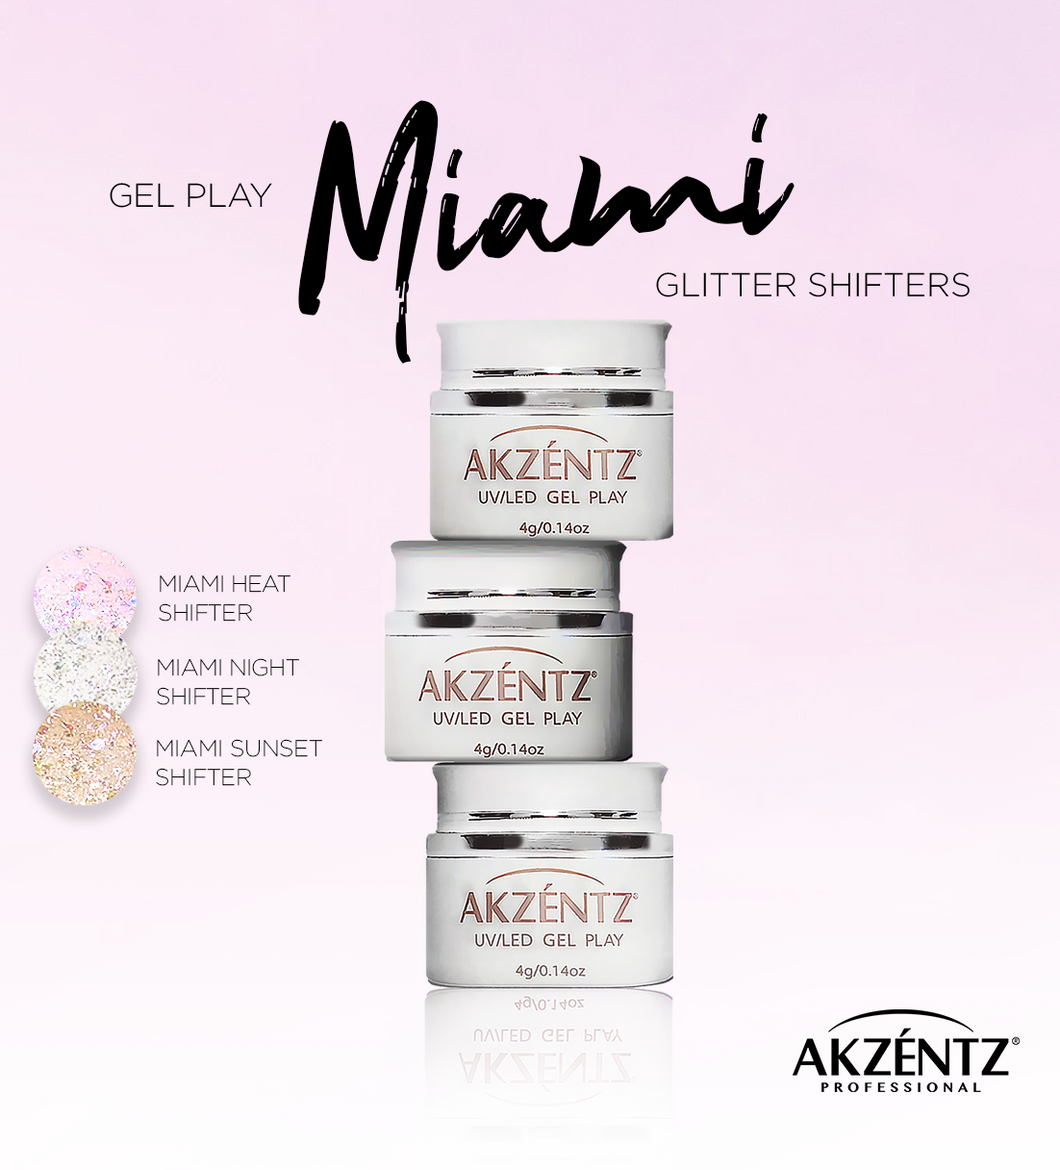 Gel Play Miami Glitter Shifter Heat